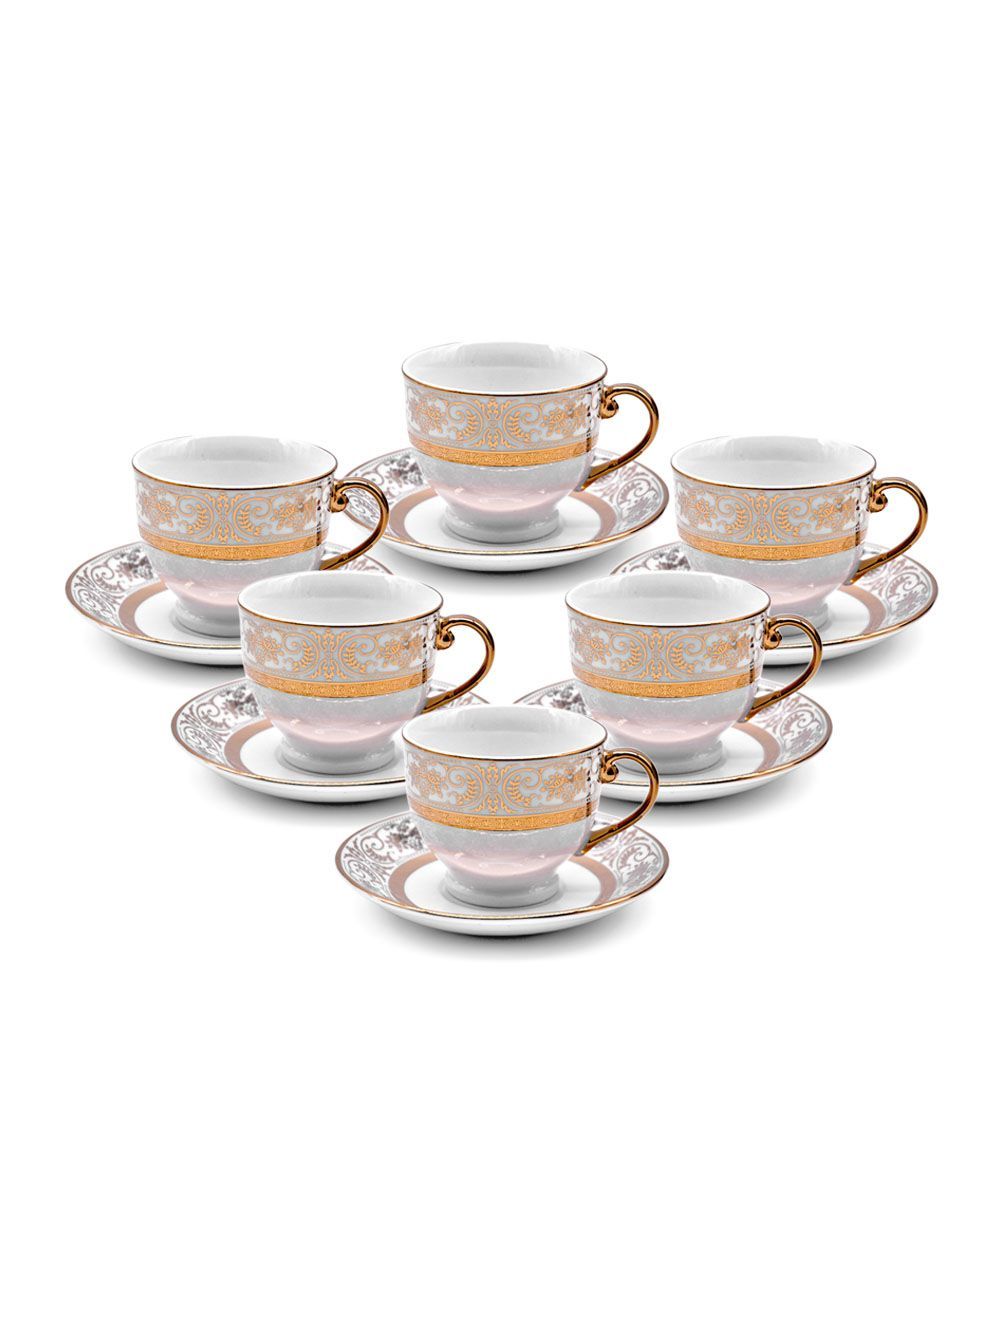 Set of 12 Pieces Tea Cup And Saucer Gold